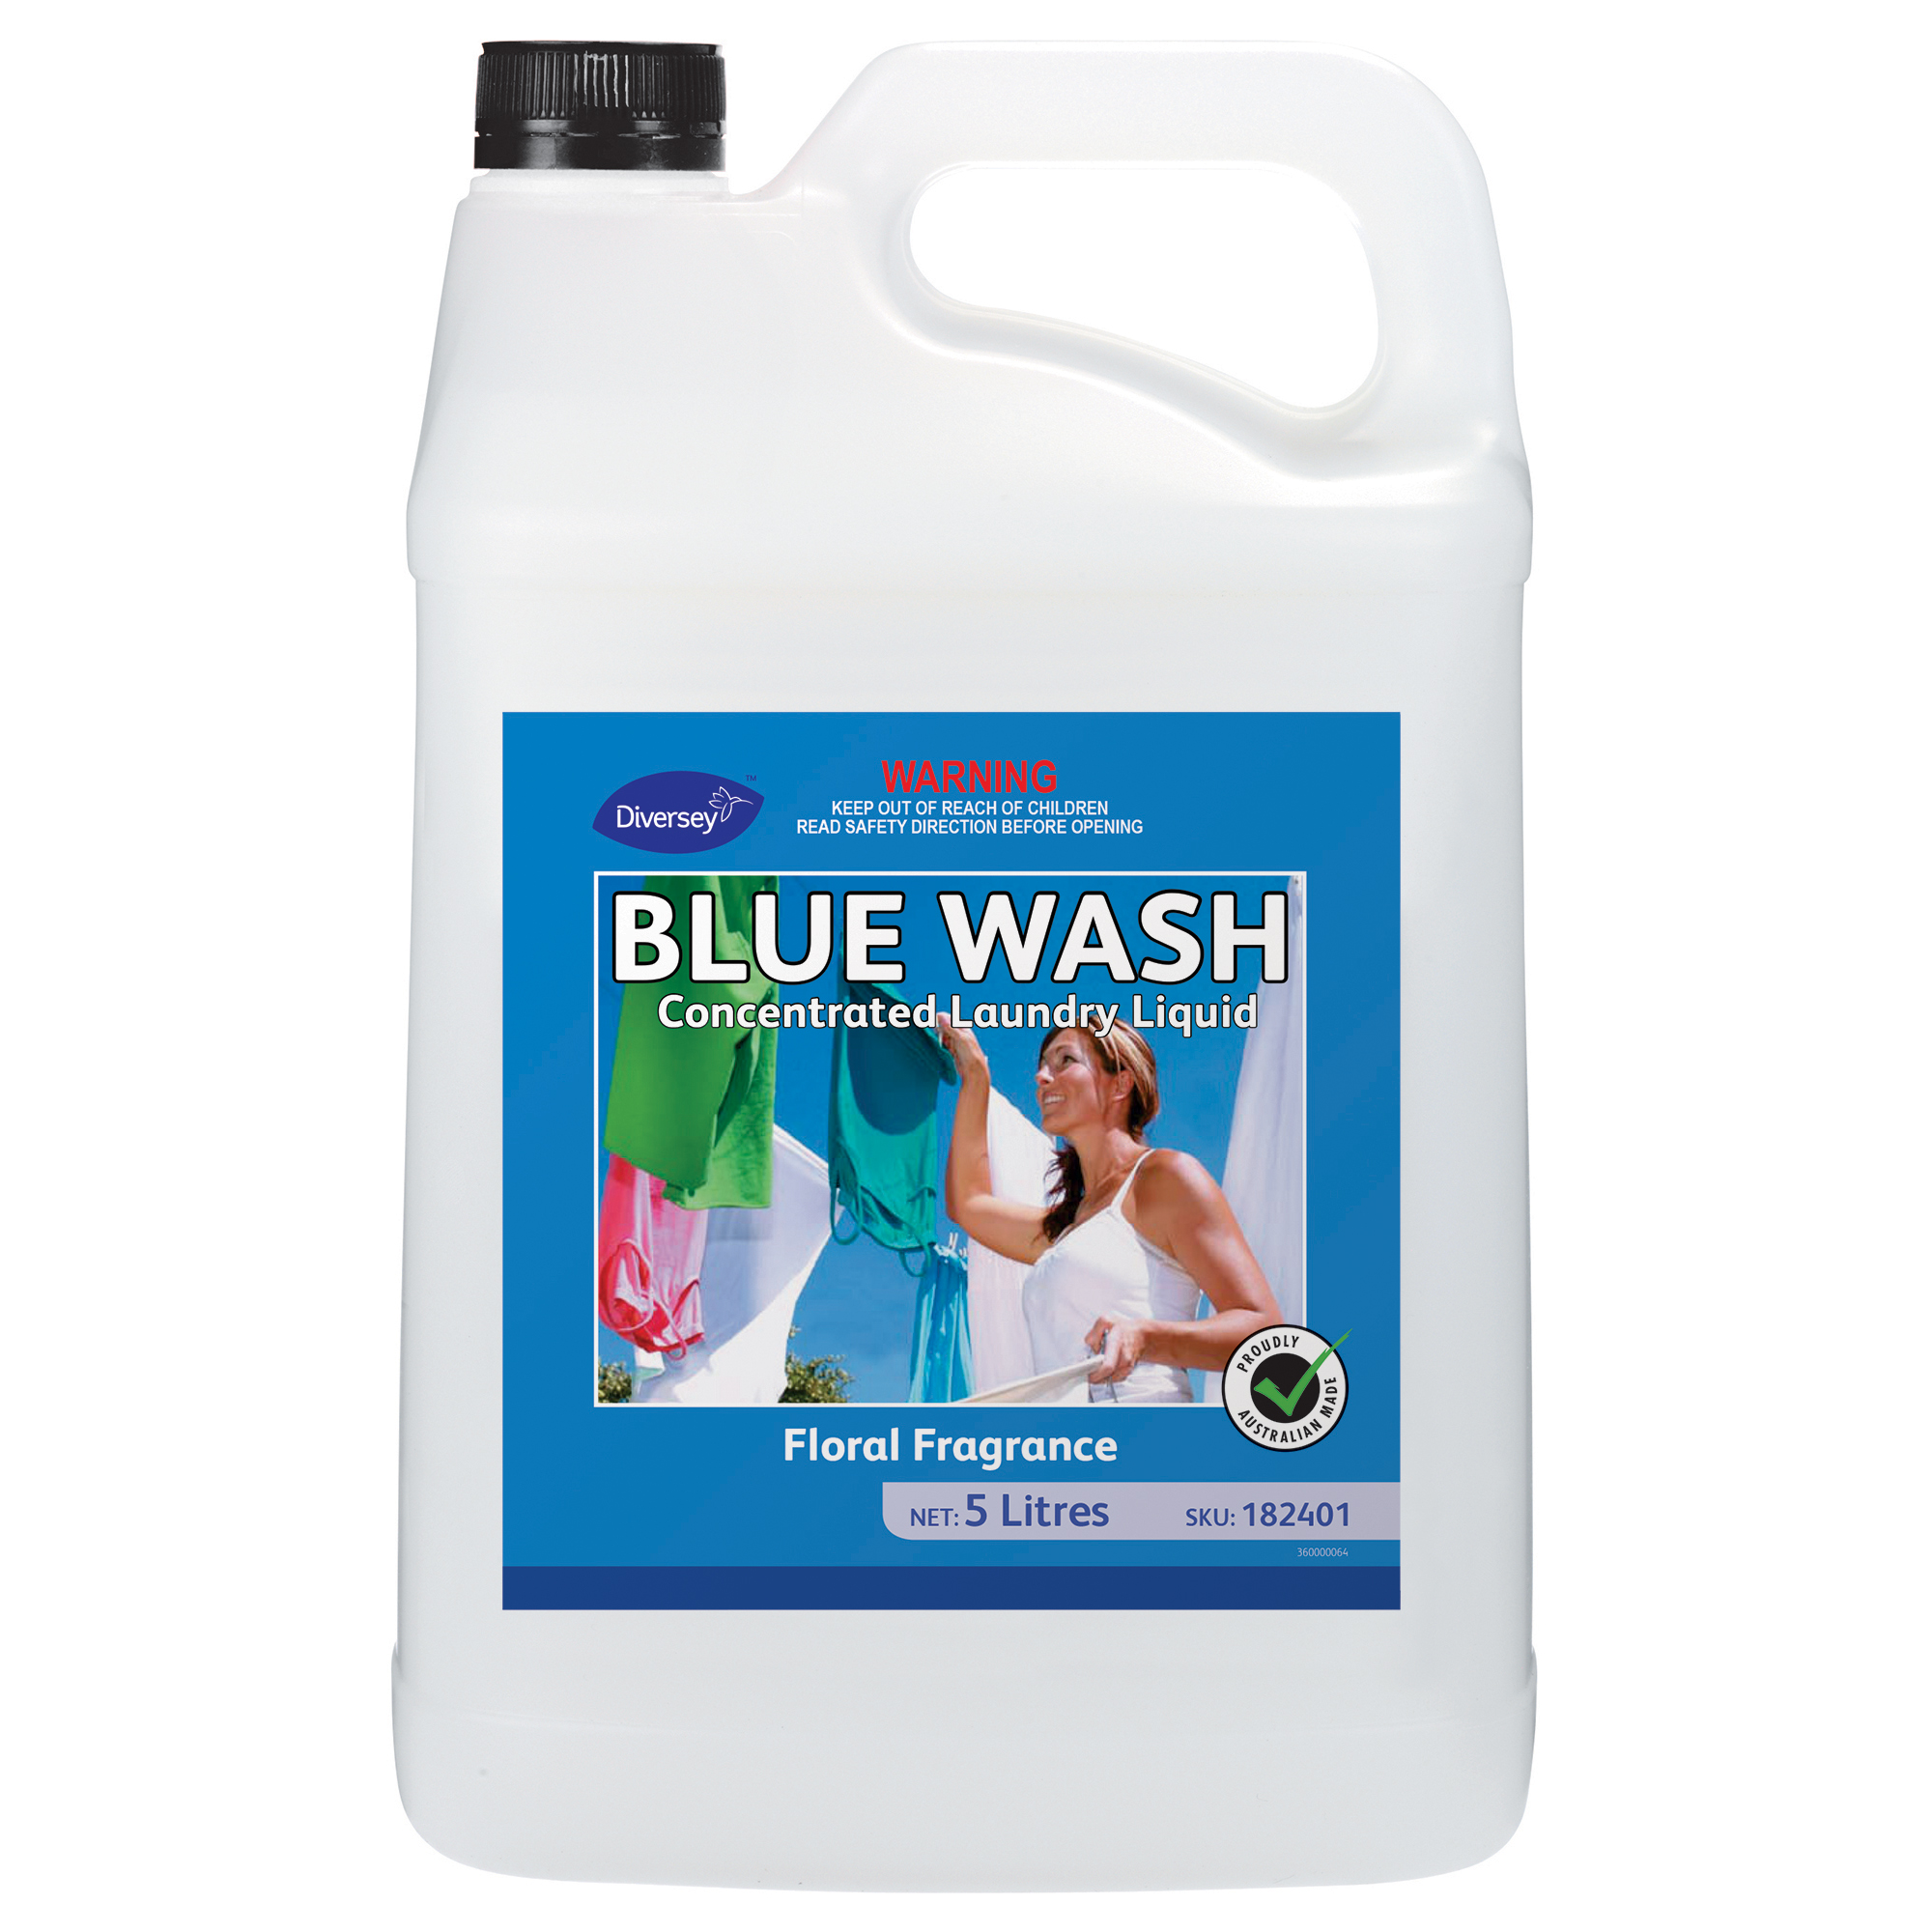 Blue wash liquid